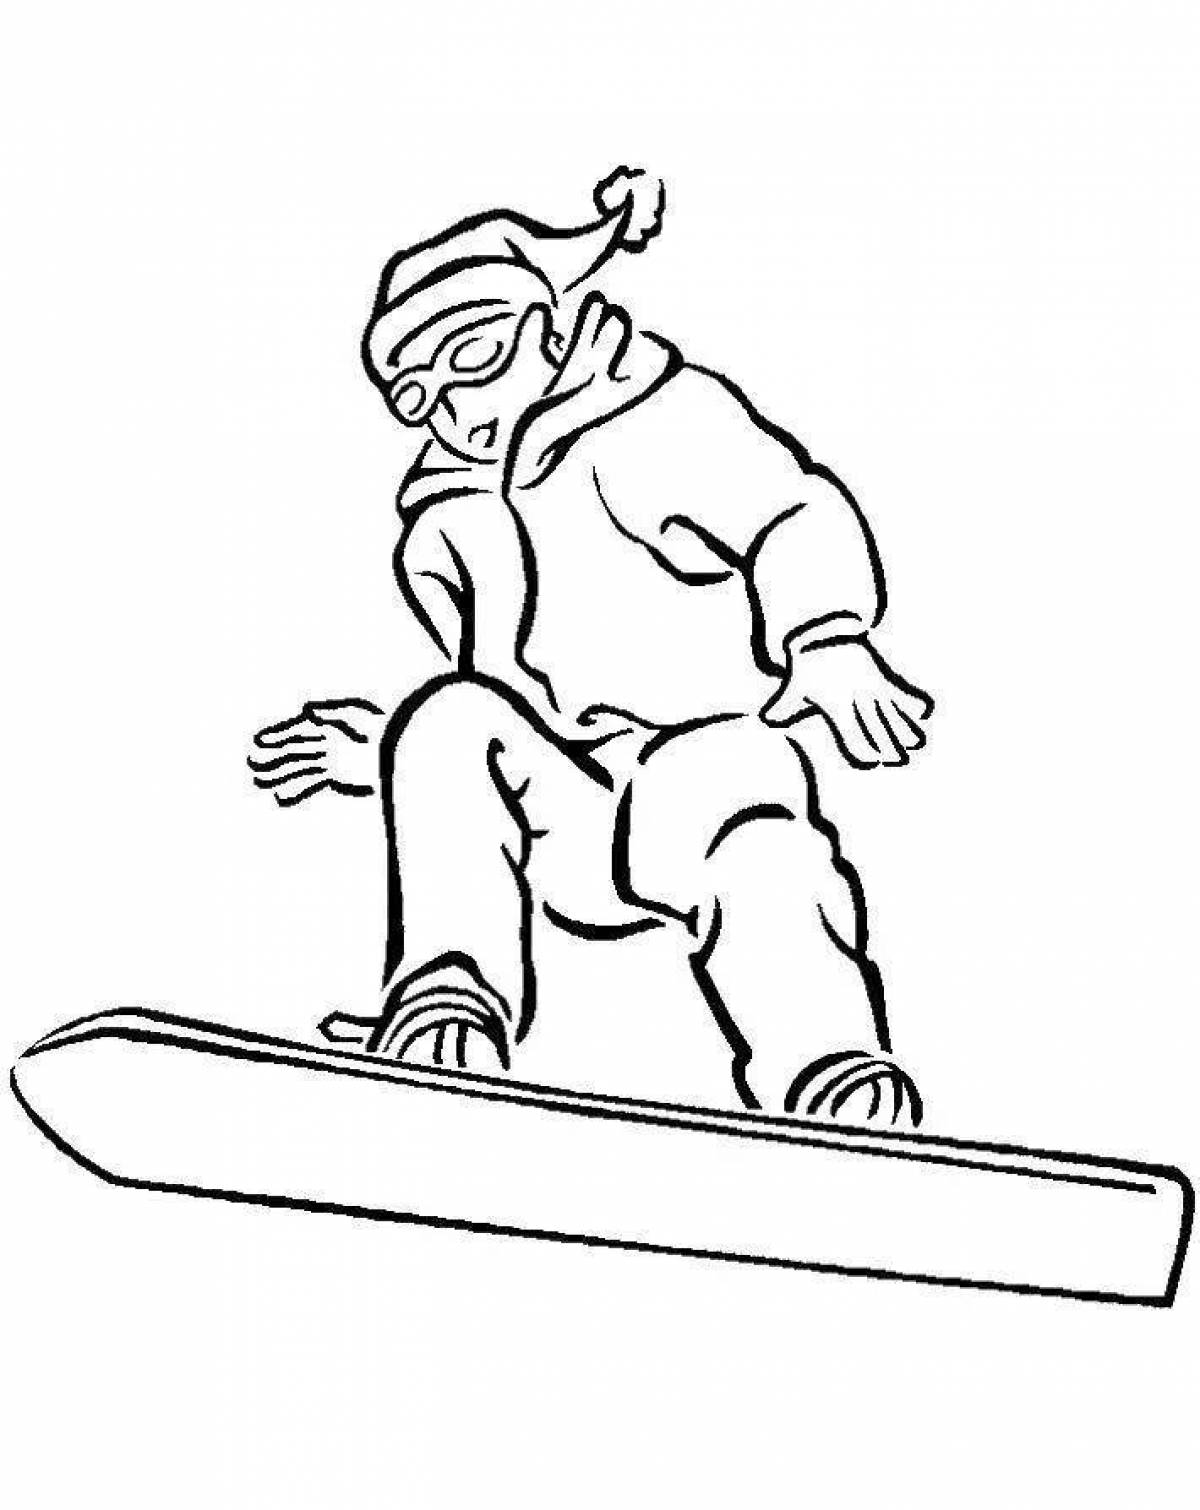 Coloring book confident snowboarder